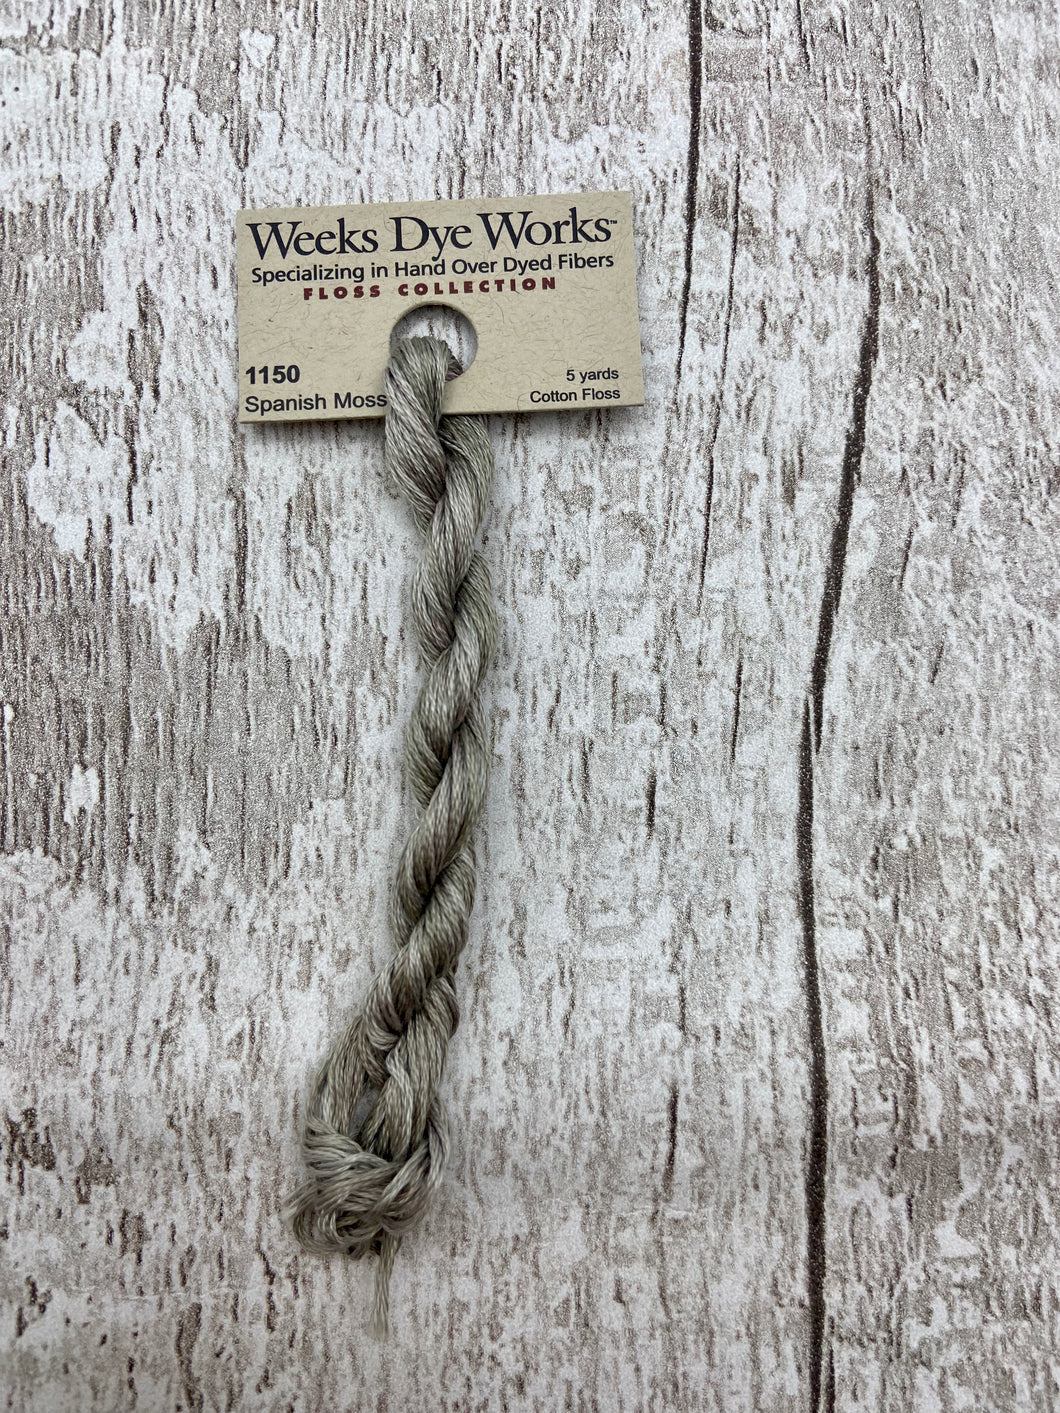 Spanish Moss (#1150) Weeks Dye Works, 6-strand cotton floss